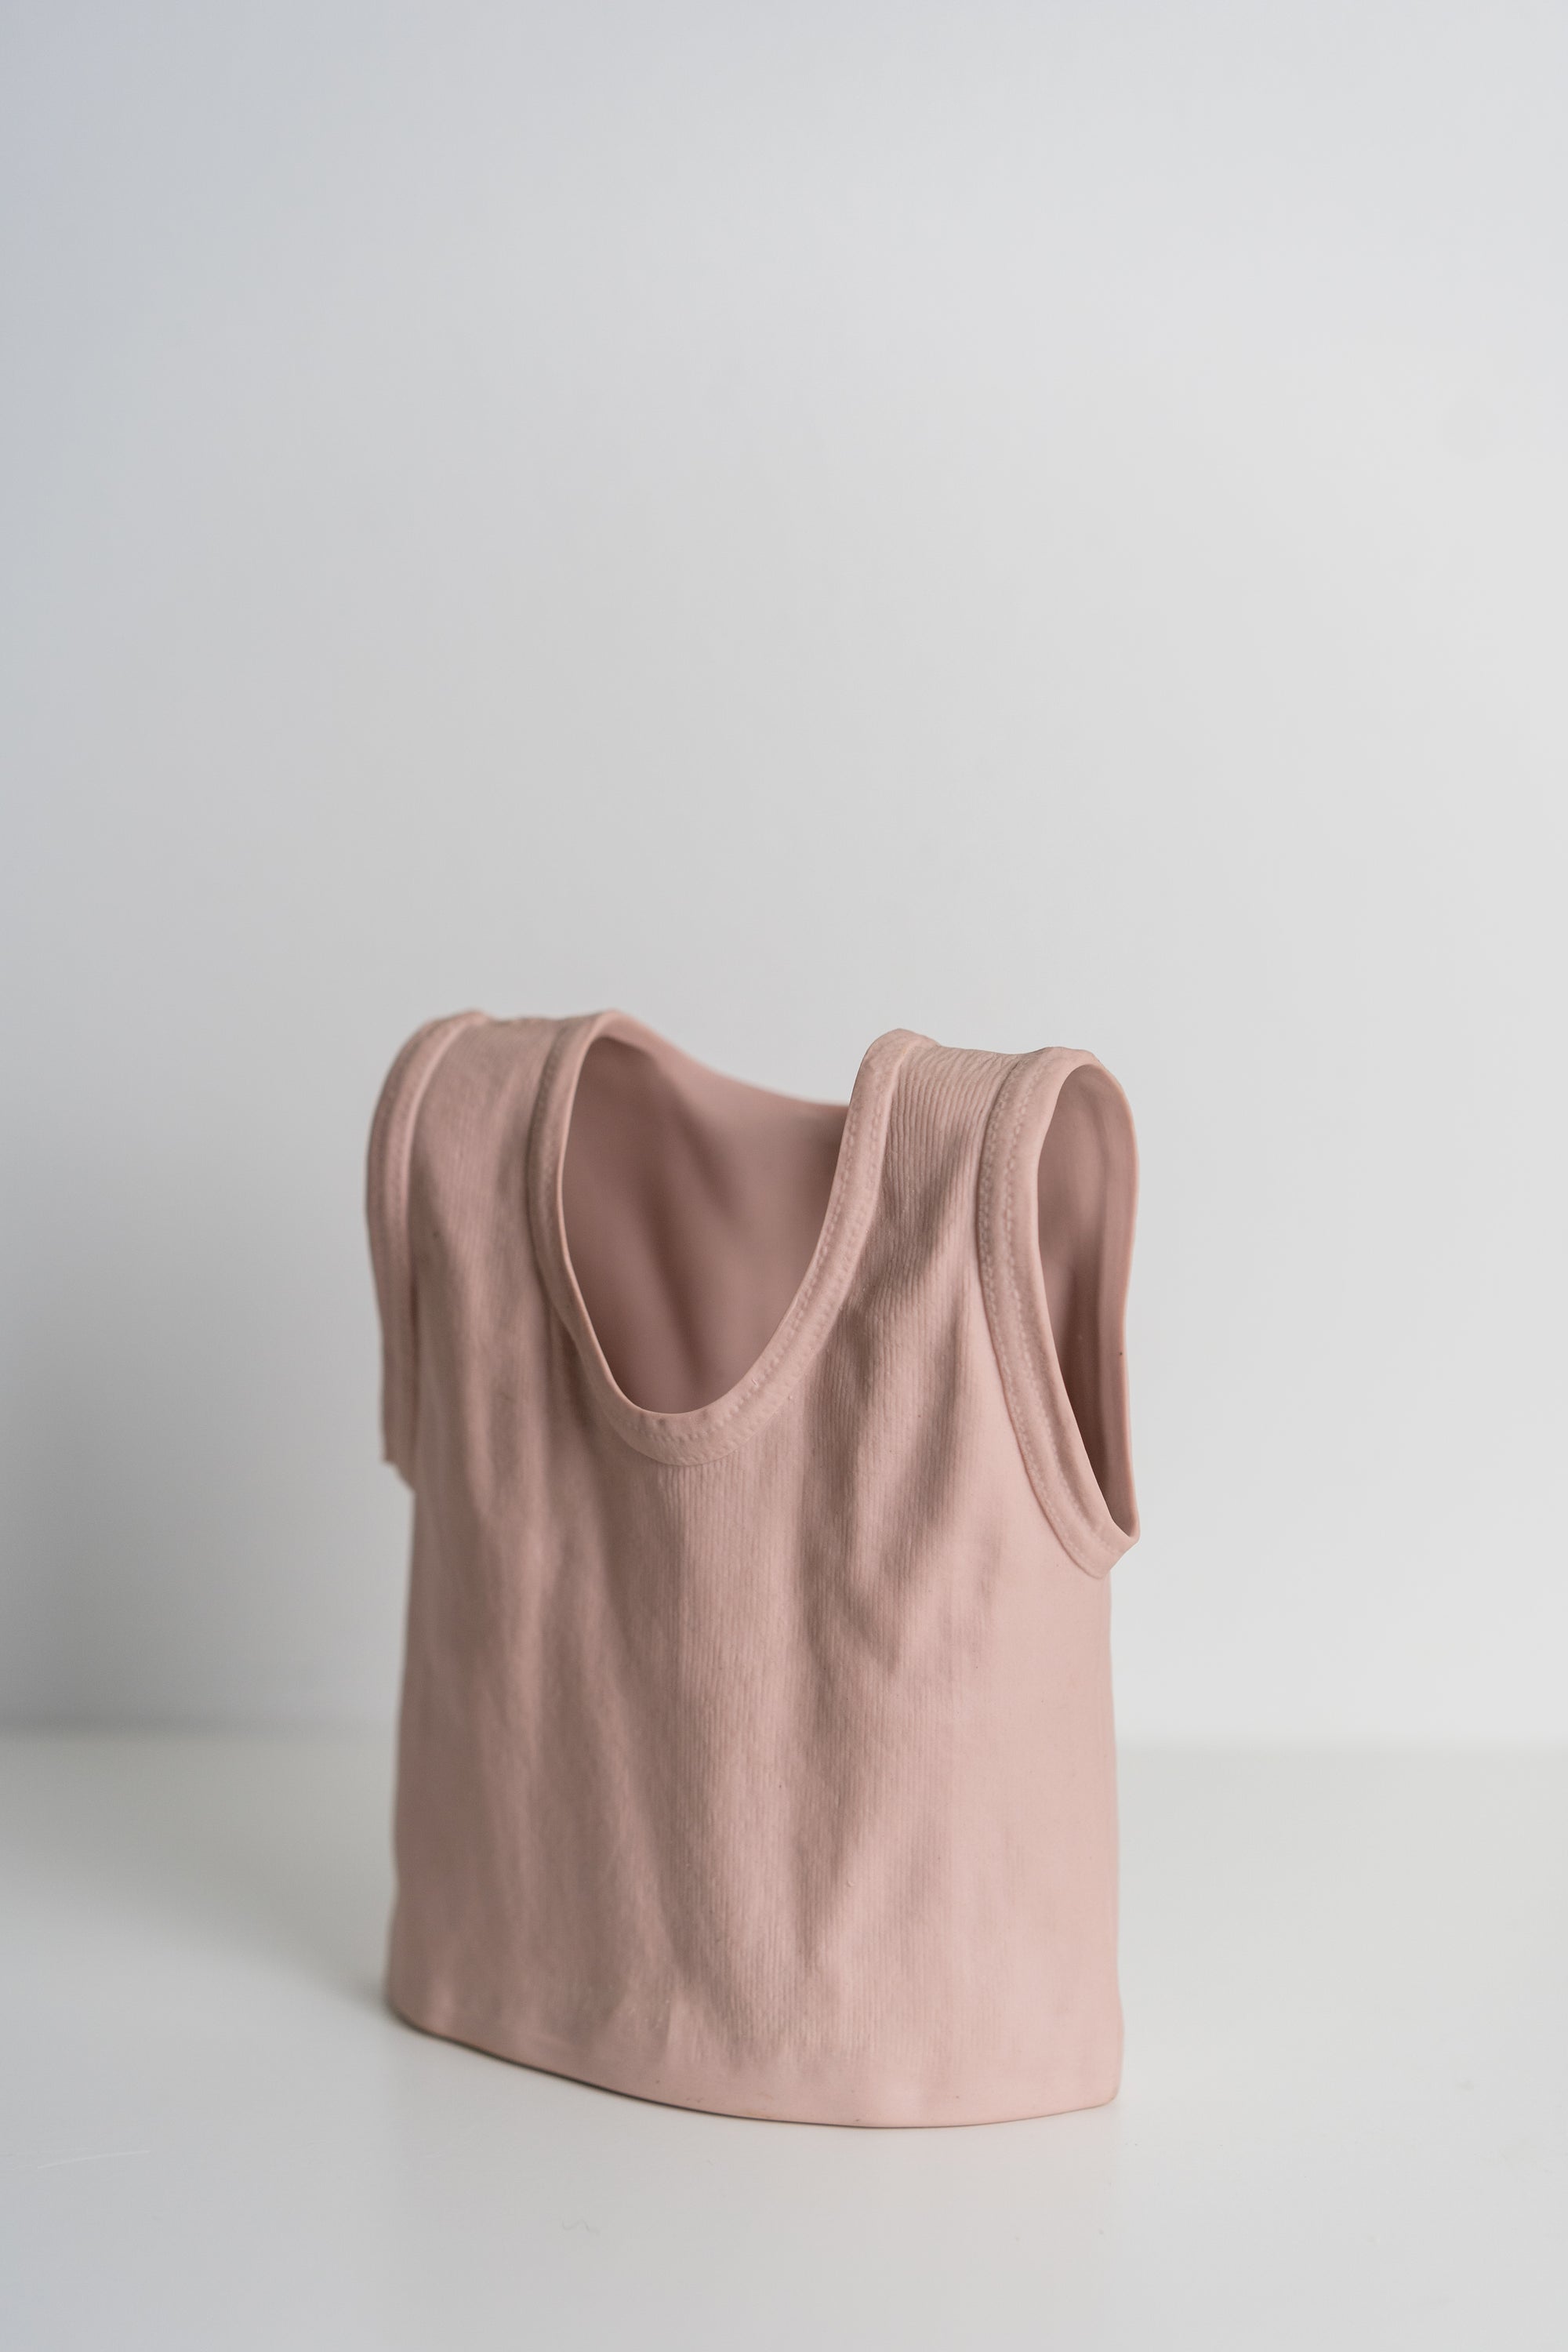 Michael Harvey Pink Shirt Vase